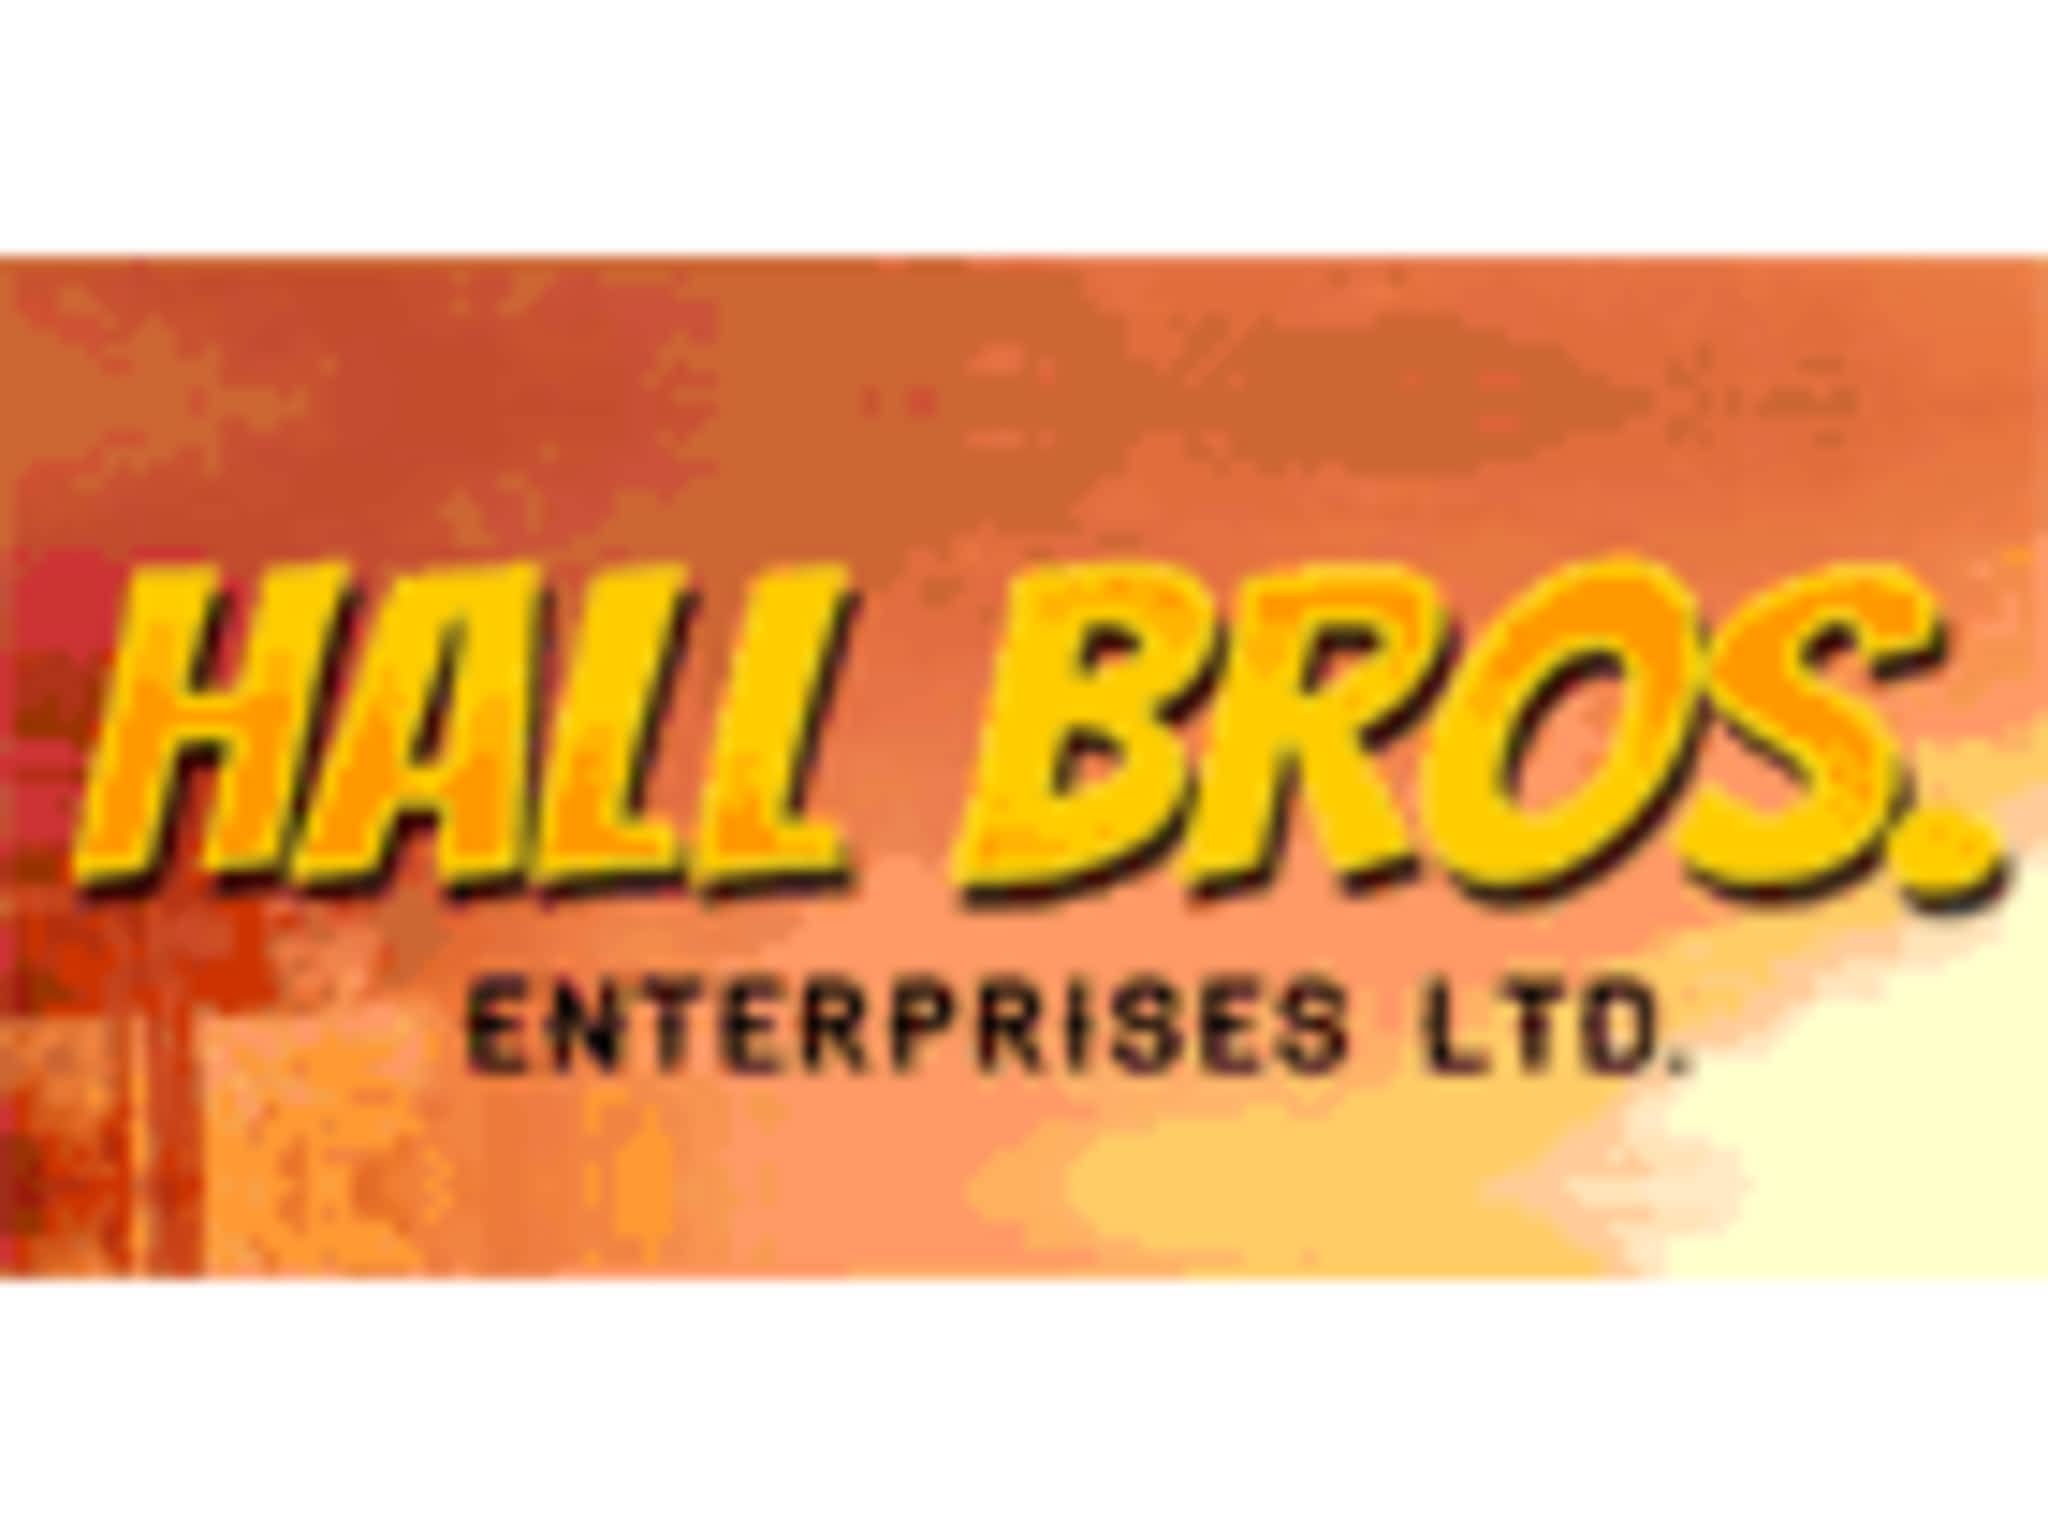 photo Hall Bros Enterprises Ltd